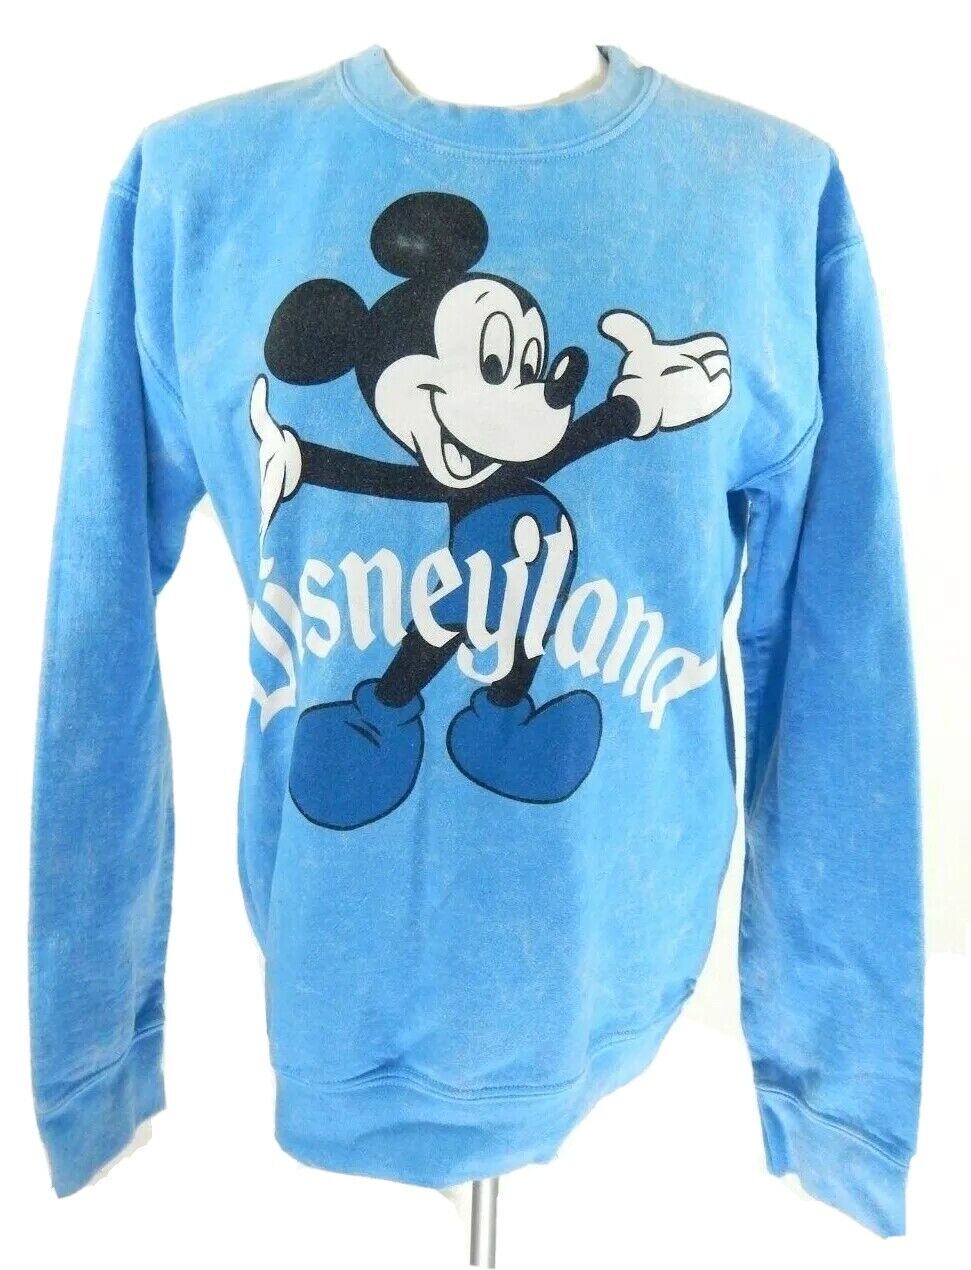 Disneyland Small Sweatshirt Retro Acid Wash Mickey Mouse Blue Crewneck EUC